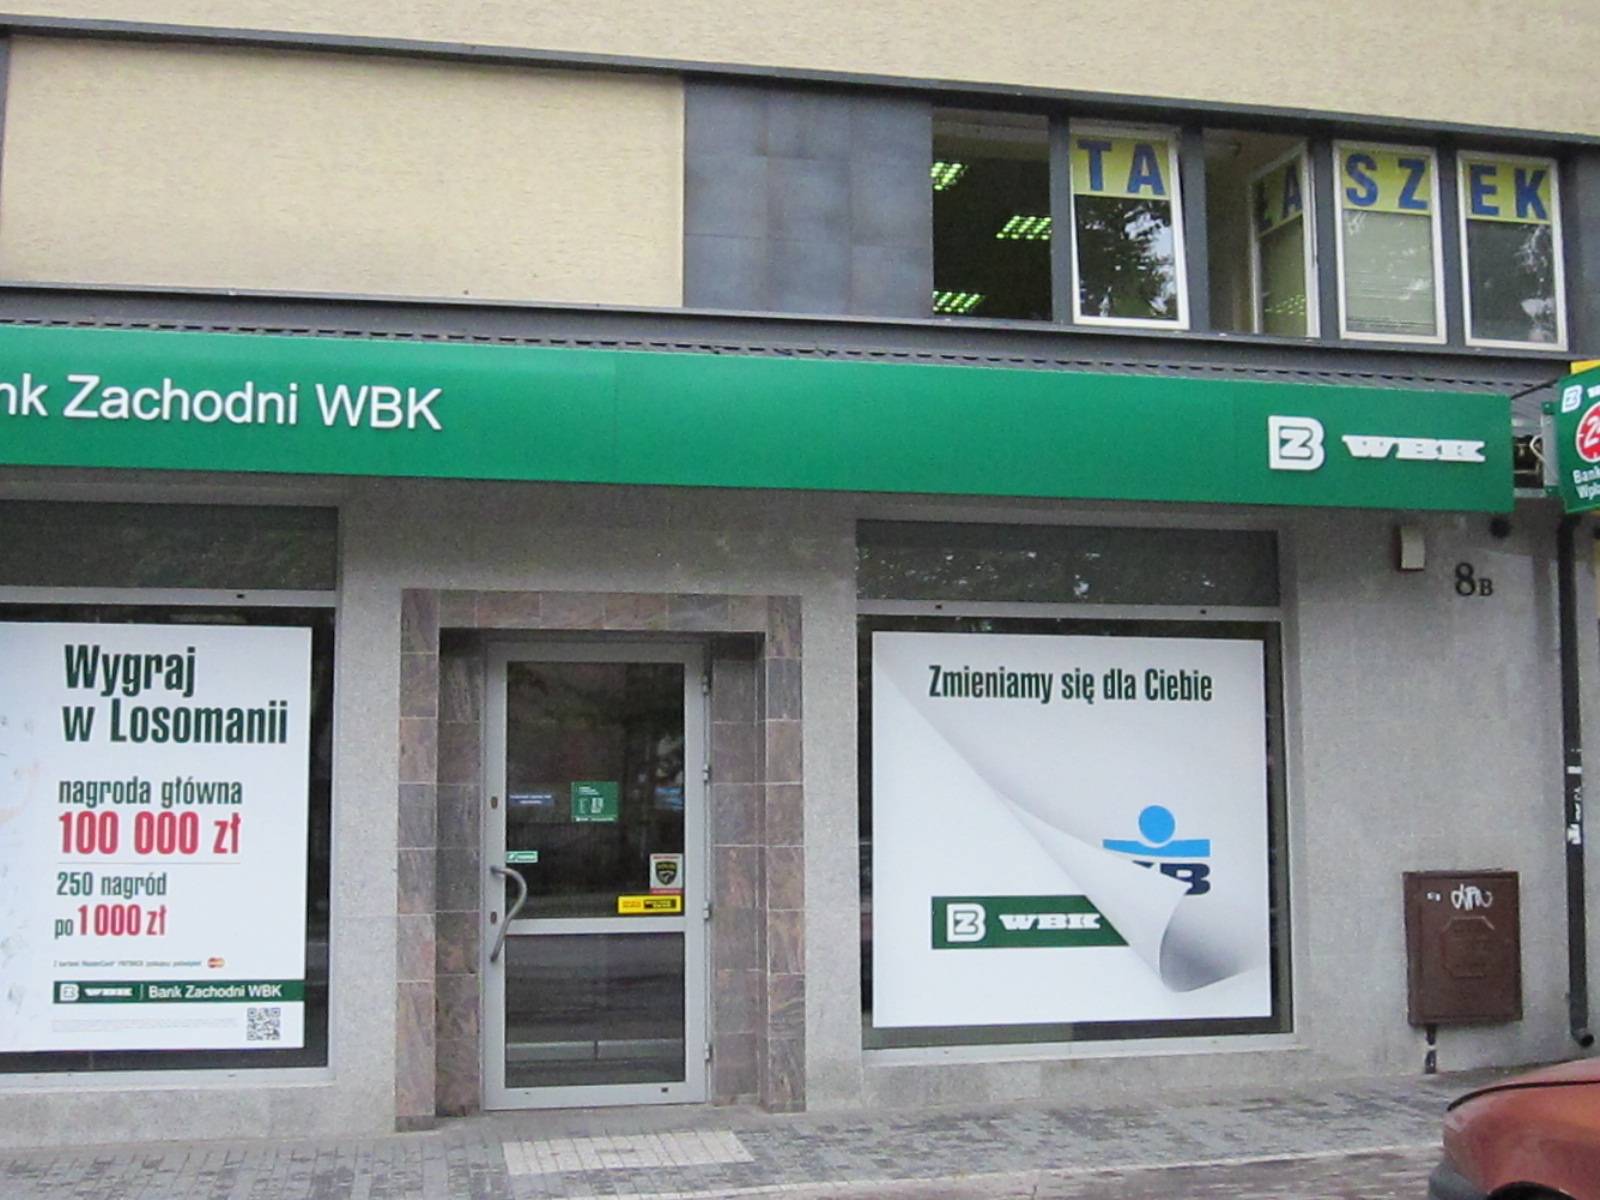 Www wbk bank zachodni logowanie - general information about login